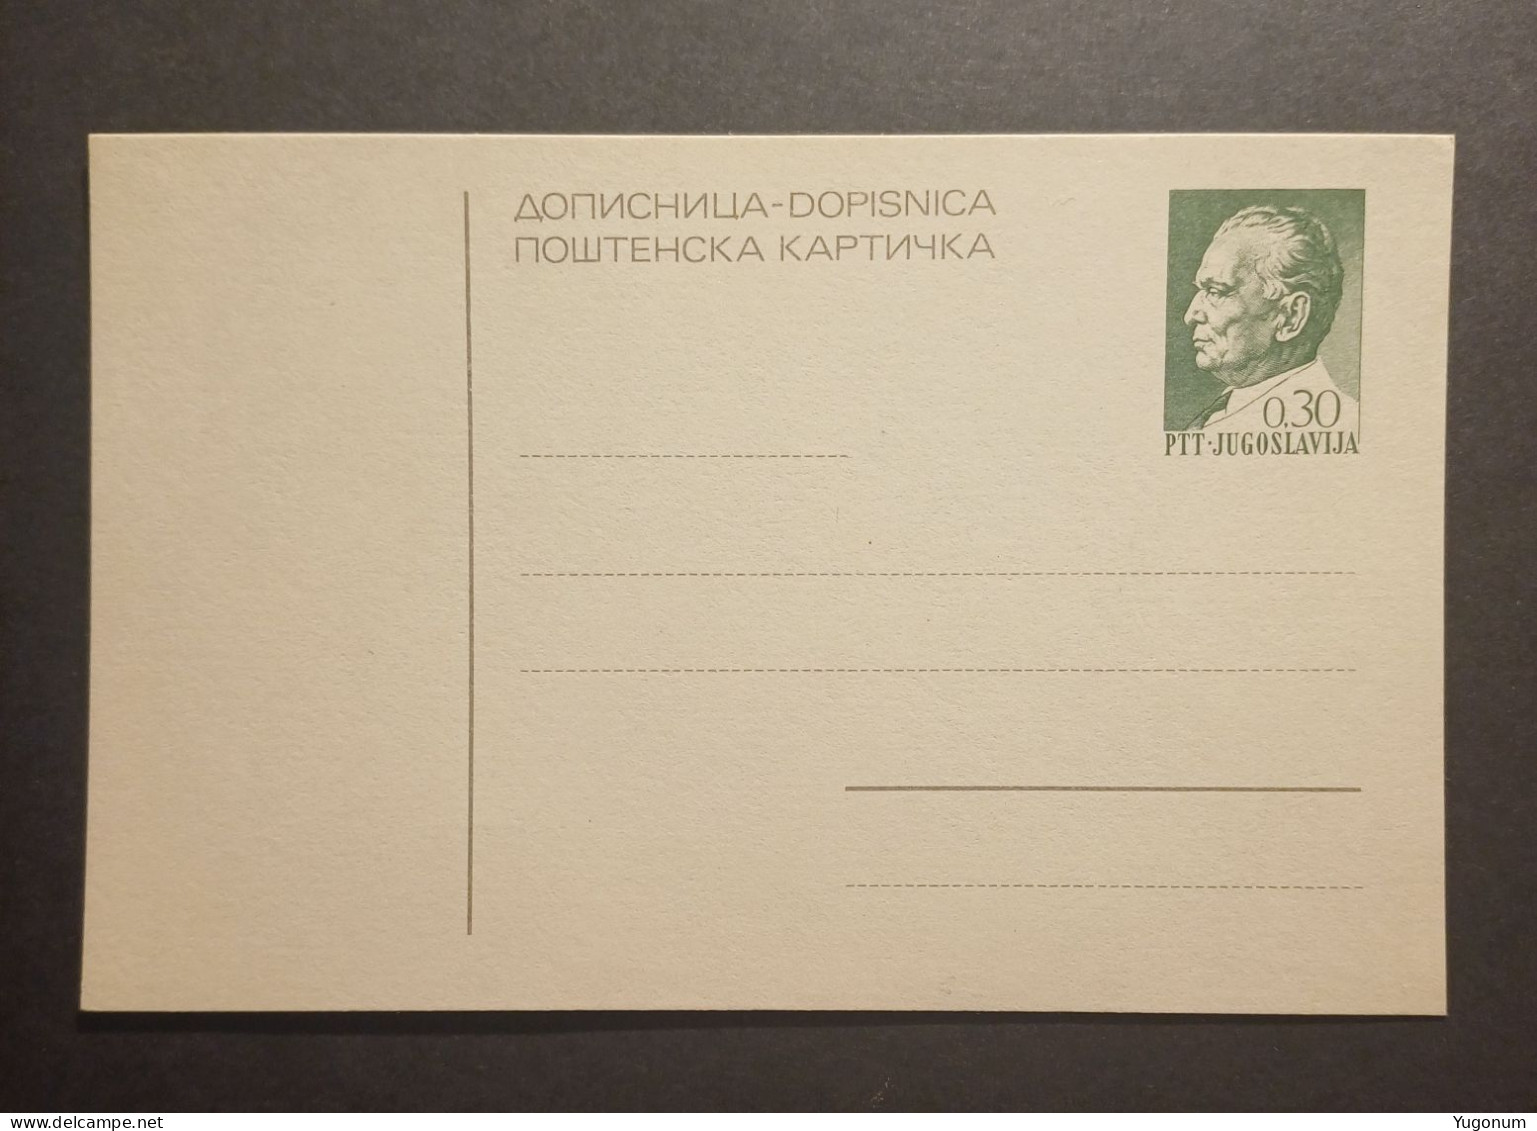 Yugoslavia Slovenia 1970's Unused Stationary Card "dopisnica" With Preprinted 0,30 Dinara Tito Stamp (No 3015) - Lettres & Documents